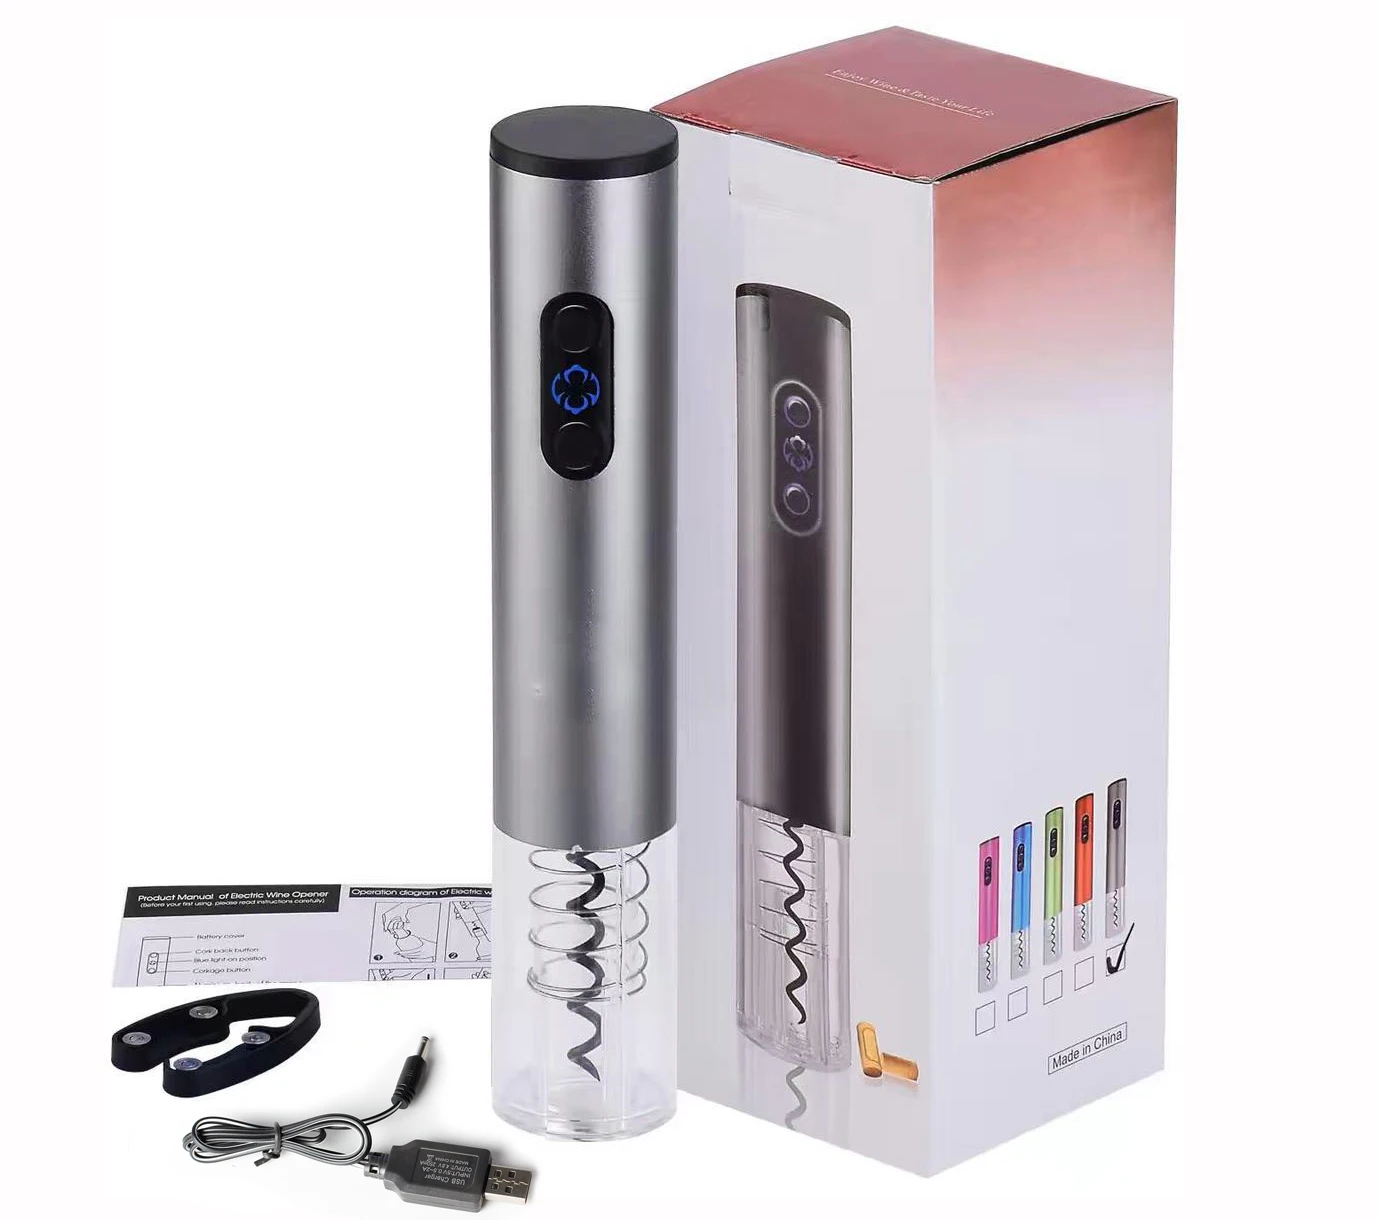 

SUNWAY Smart Kitchen Gadget 2020 USB Charged Automatic Bottle Opener Electric Wine Corkscrew Popular on Amazon